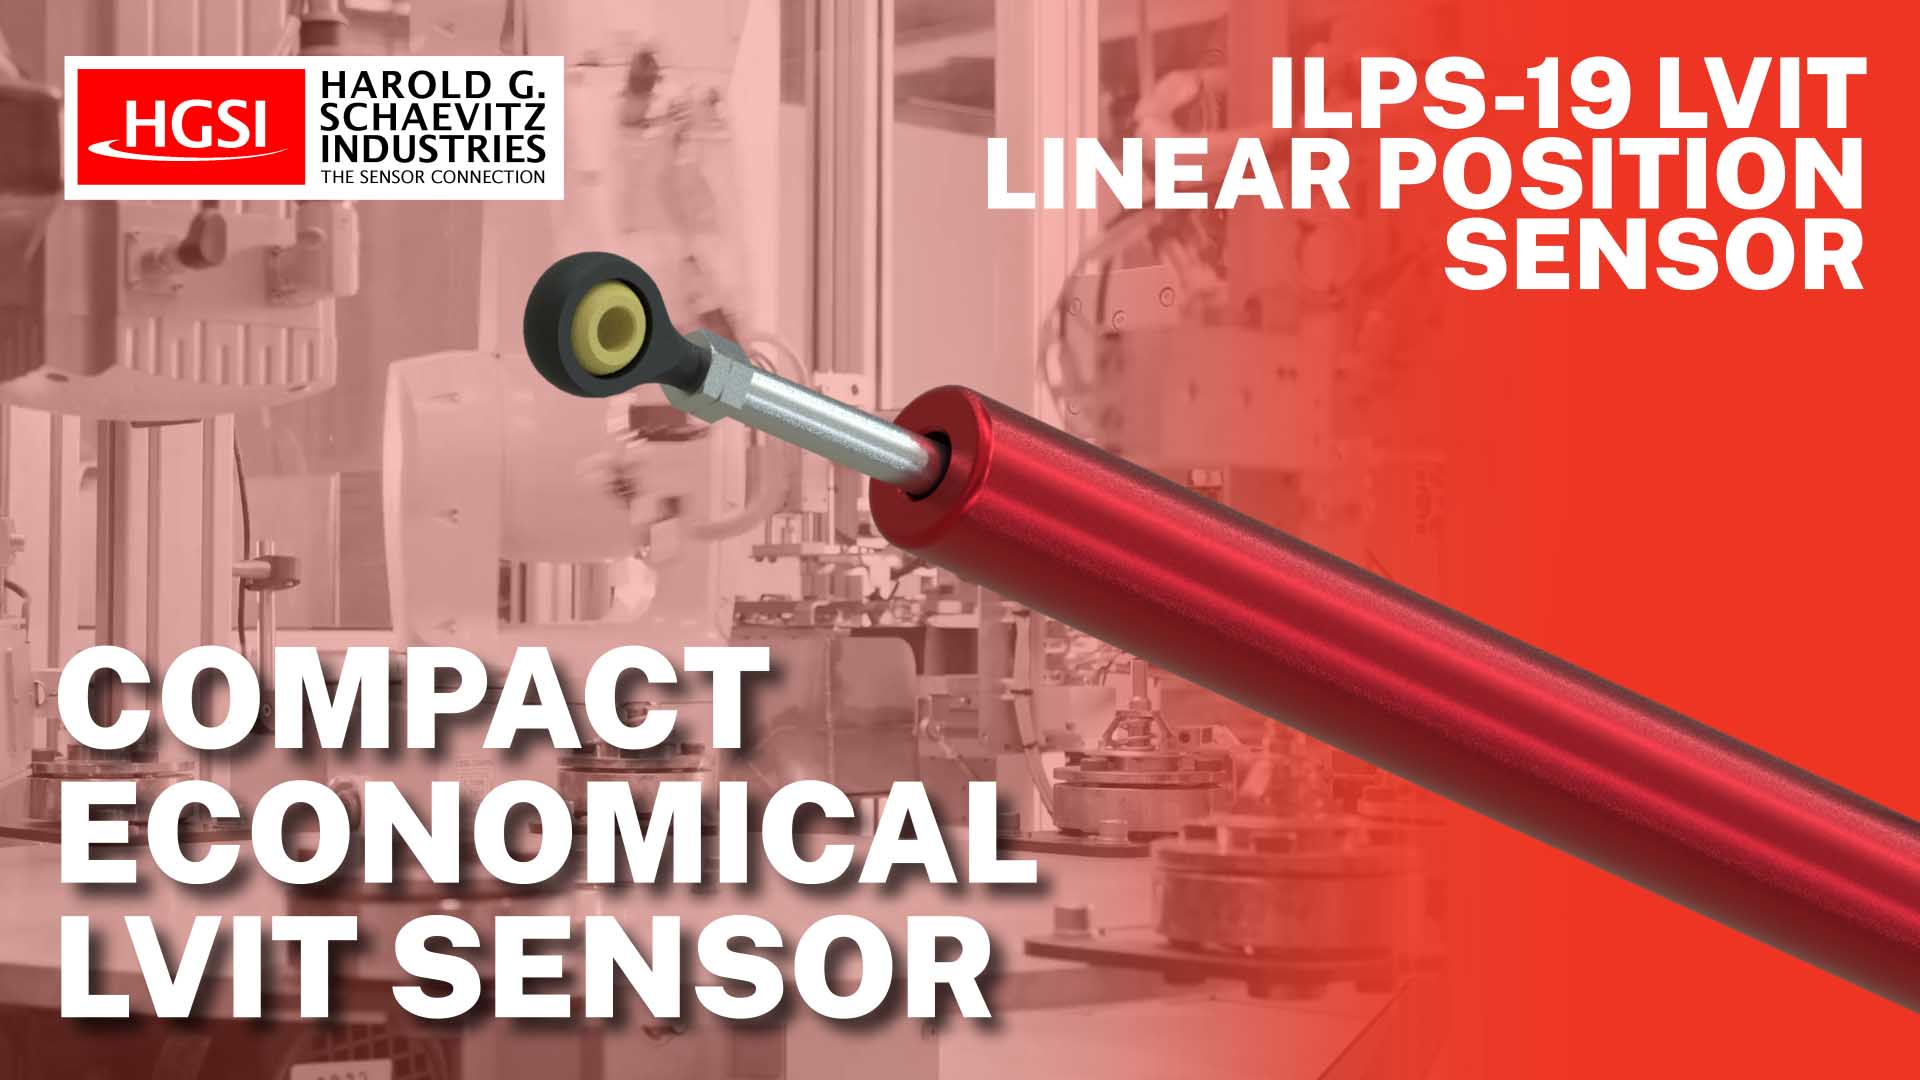 Overview of ILPS-19 Series LVIT Linear Position Sensor